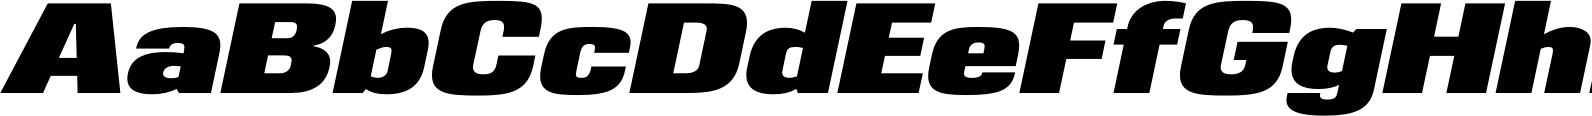 eurocine font for mac free download